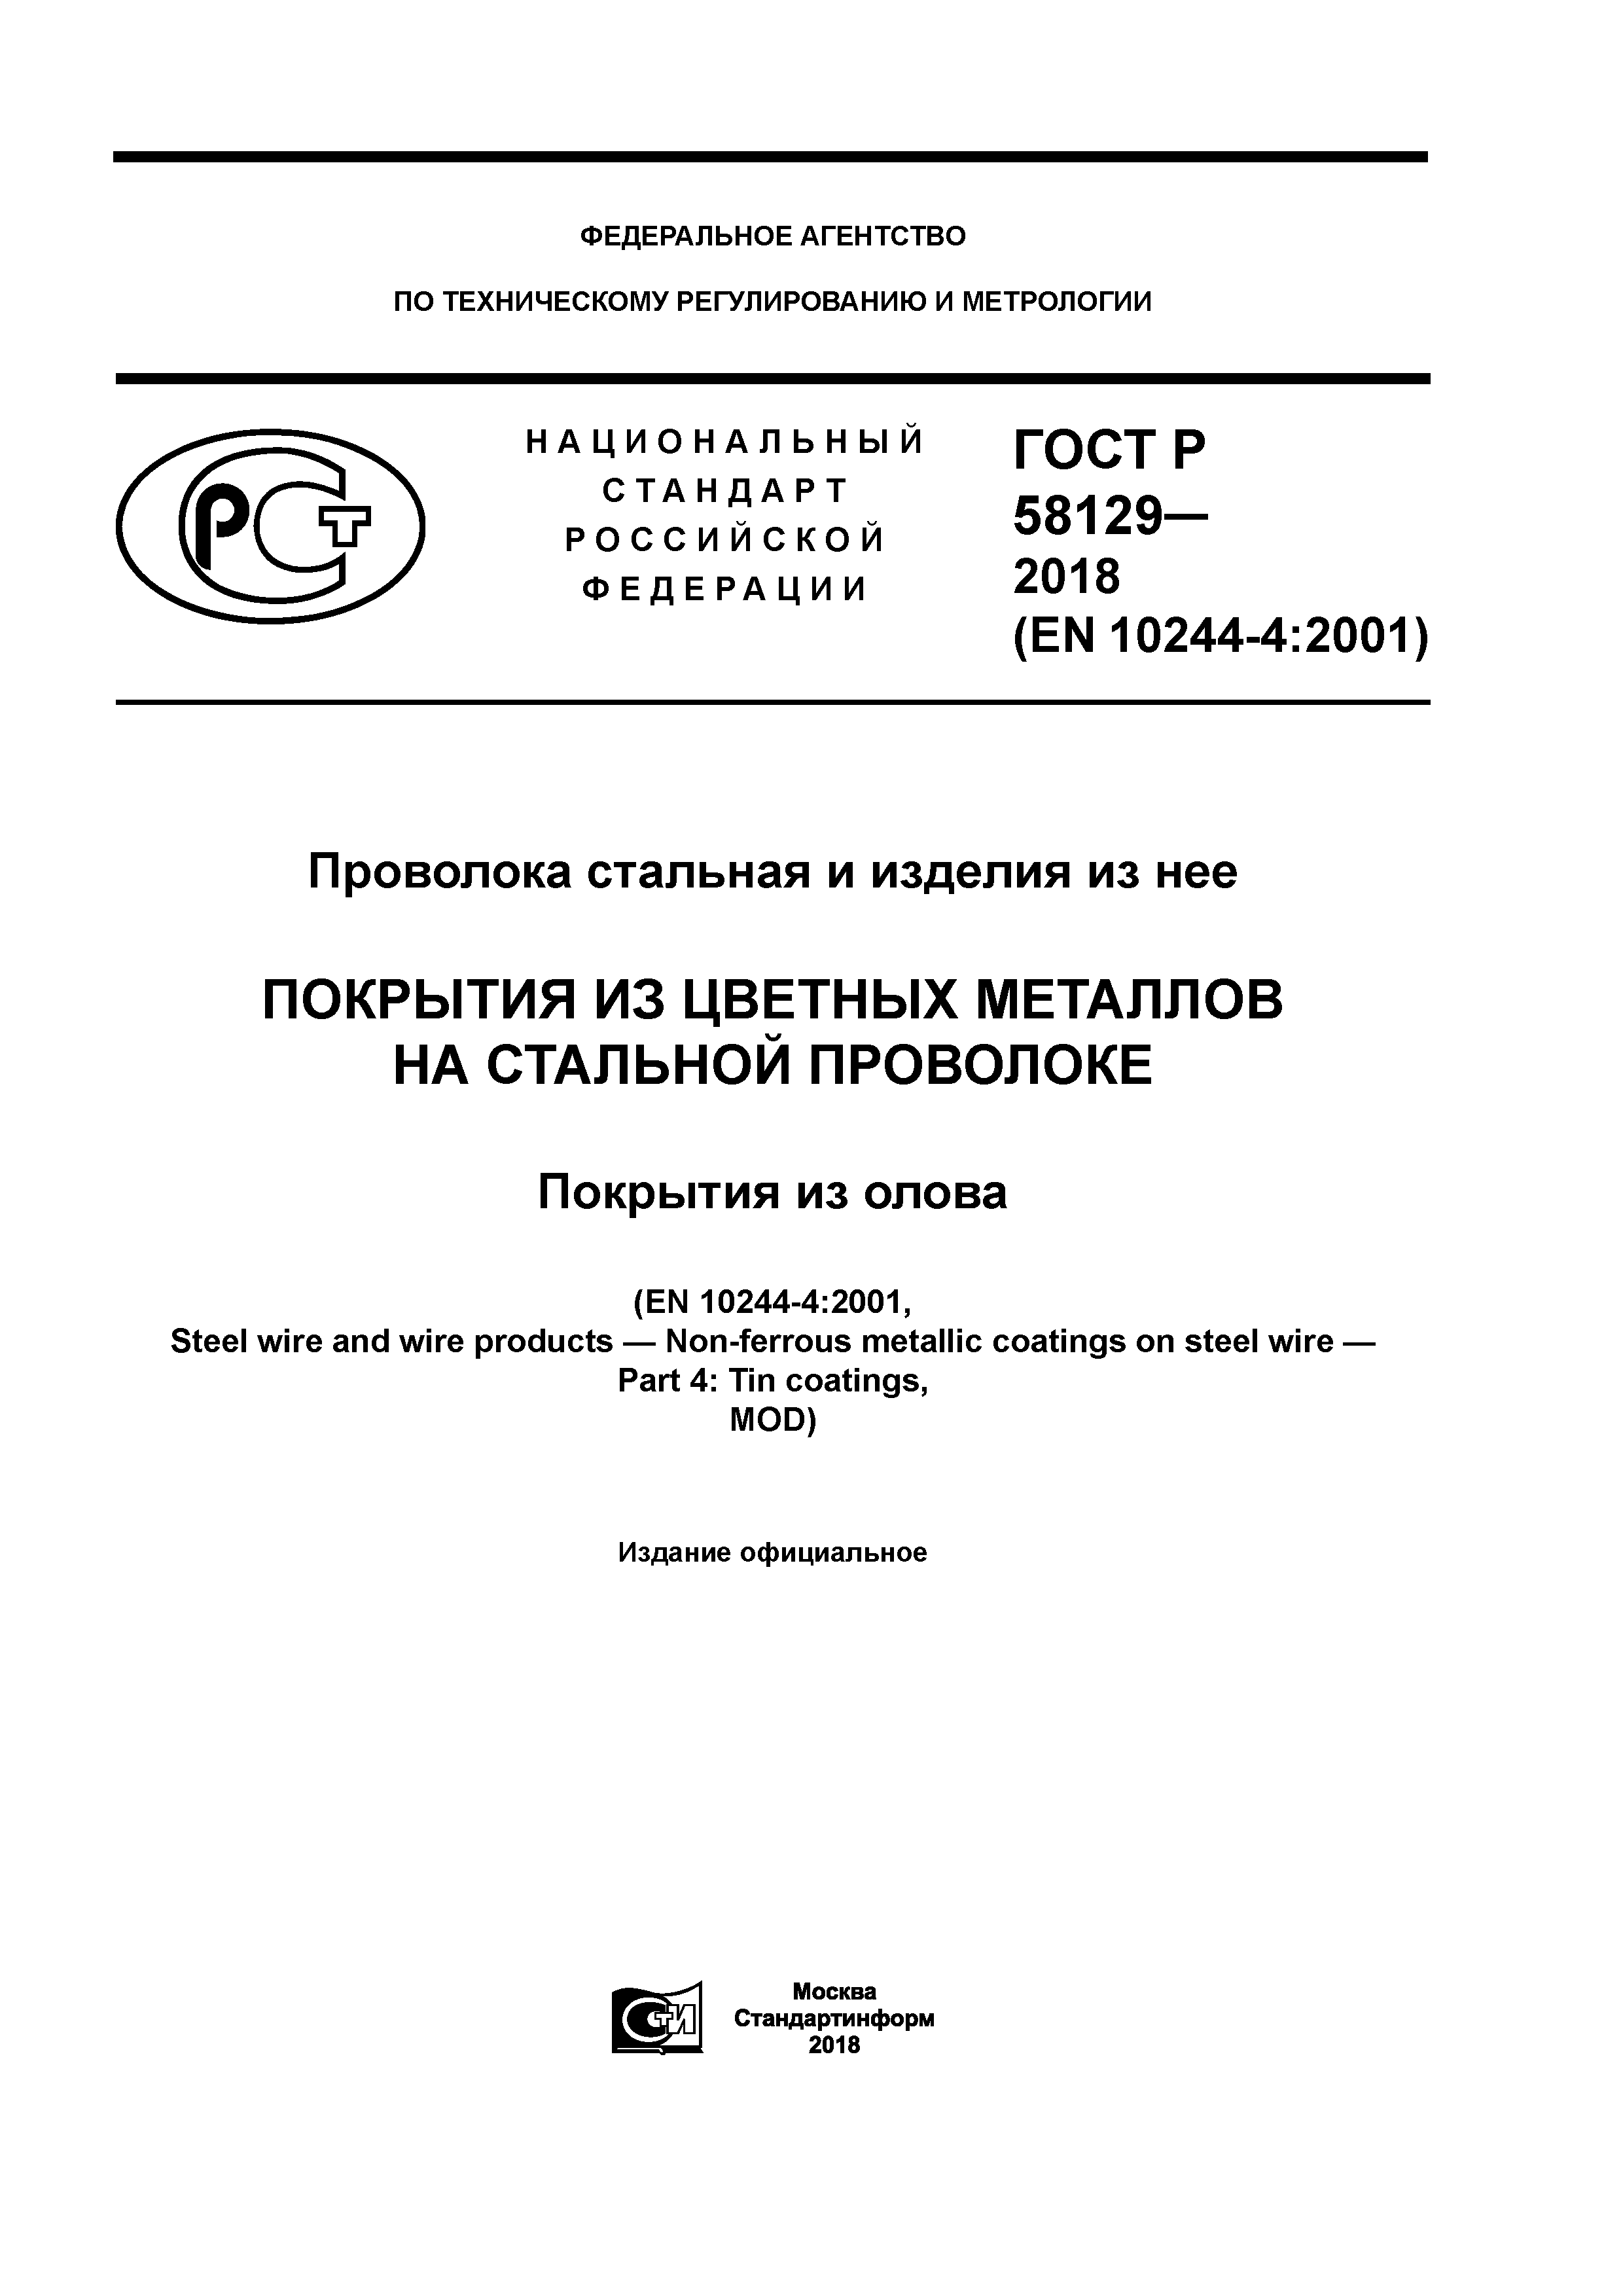 ГОСТ Р 58129-2018